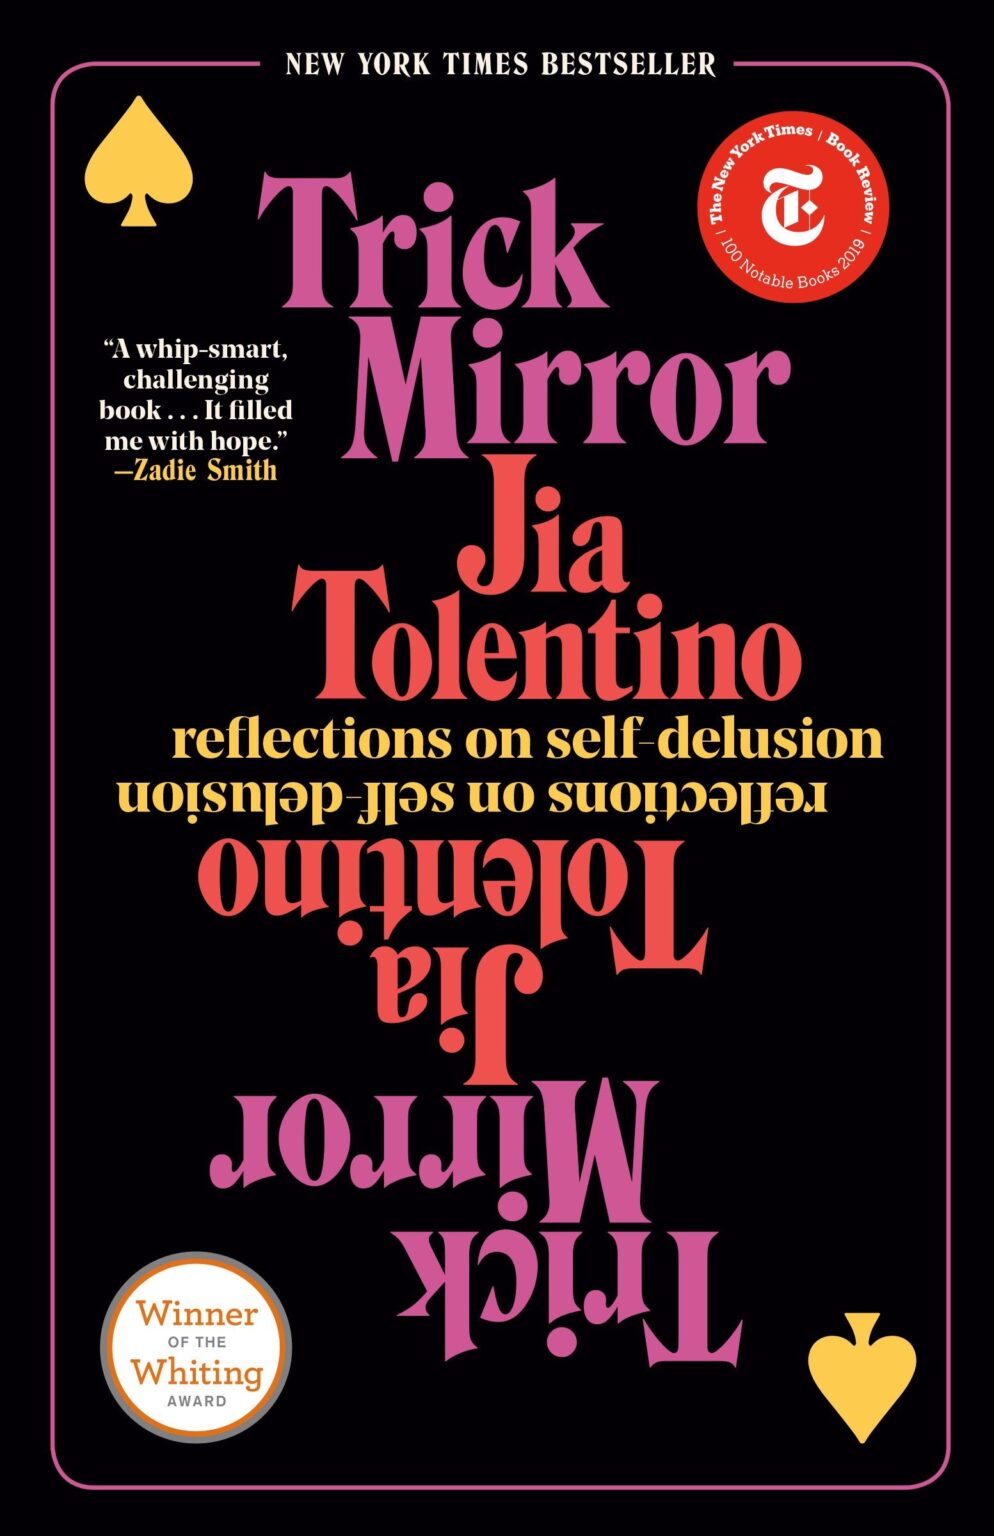 trick mirror jia